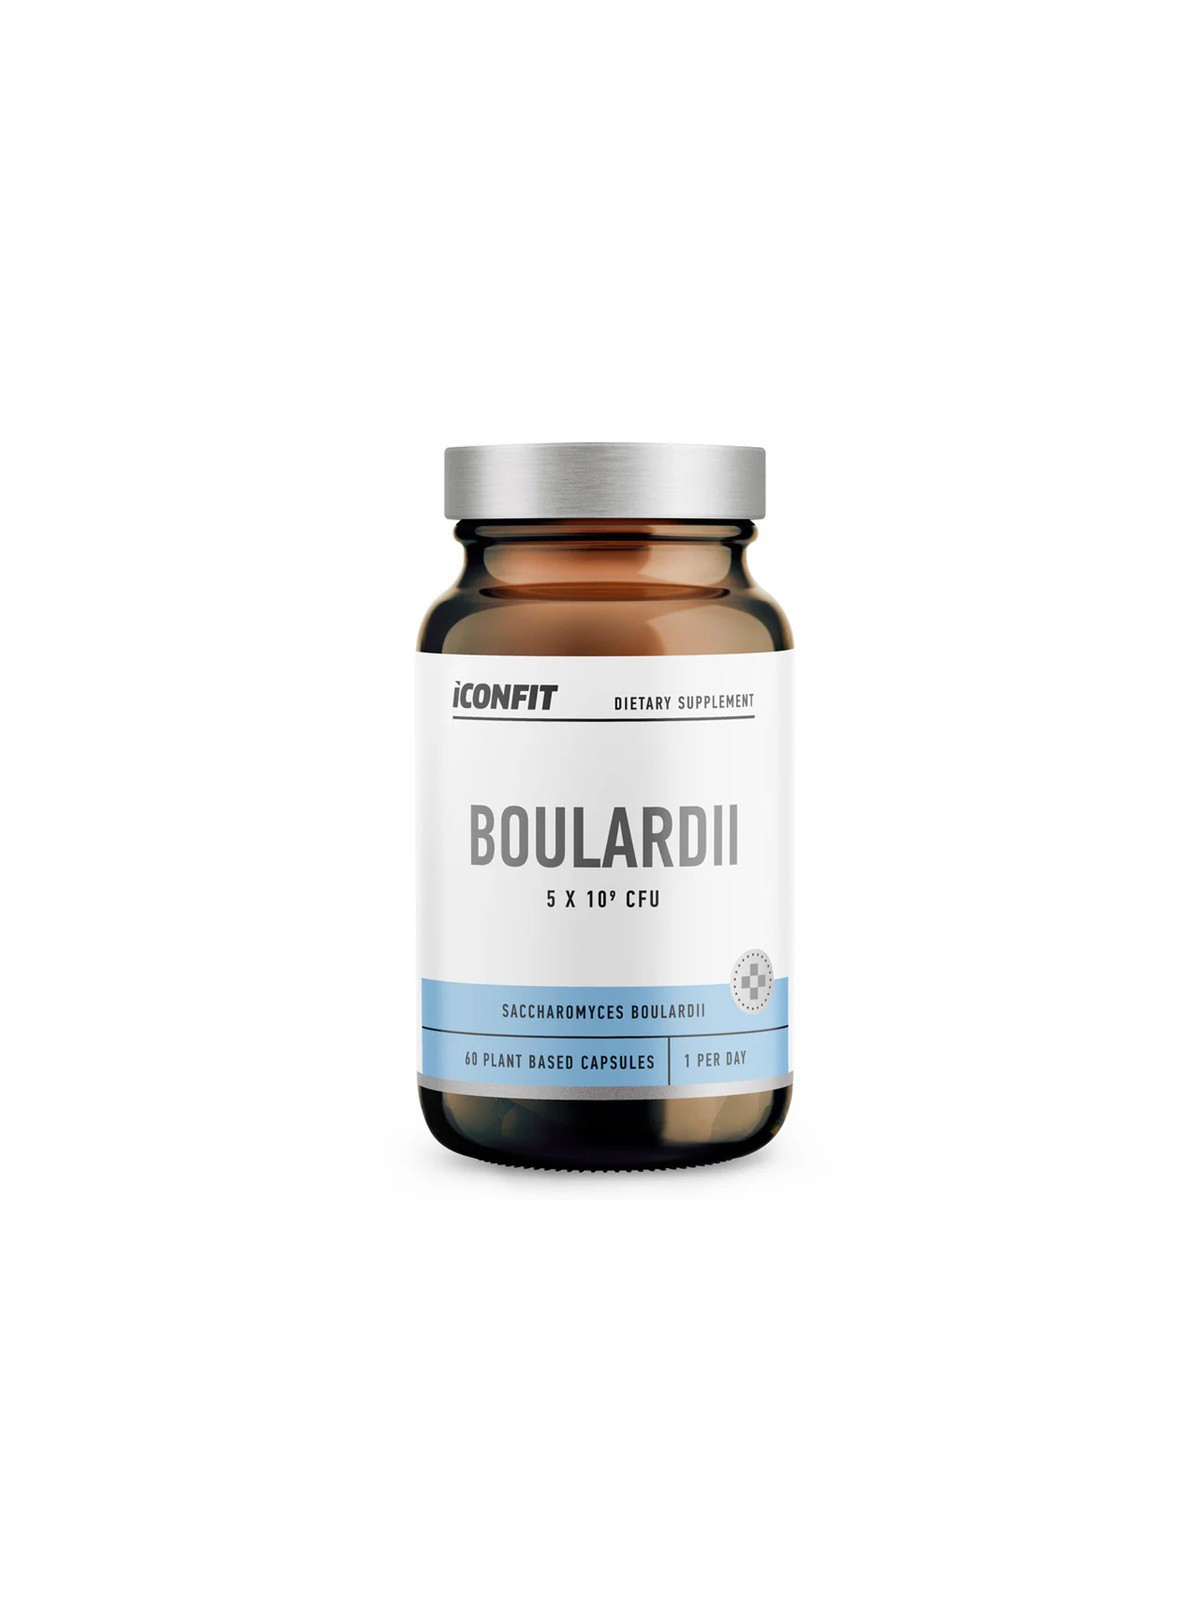 Iconfit Boulardii maisto papildas Boulardii Supplement